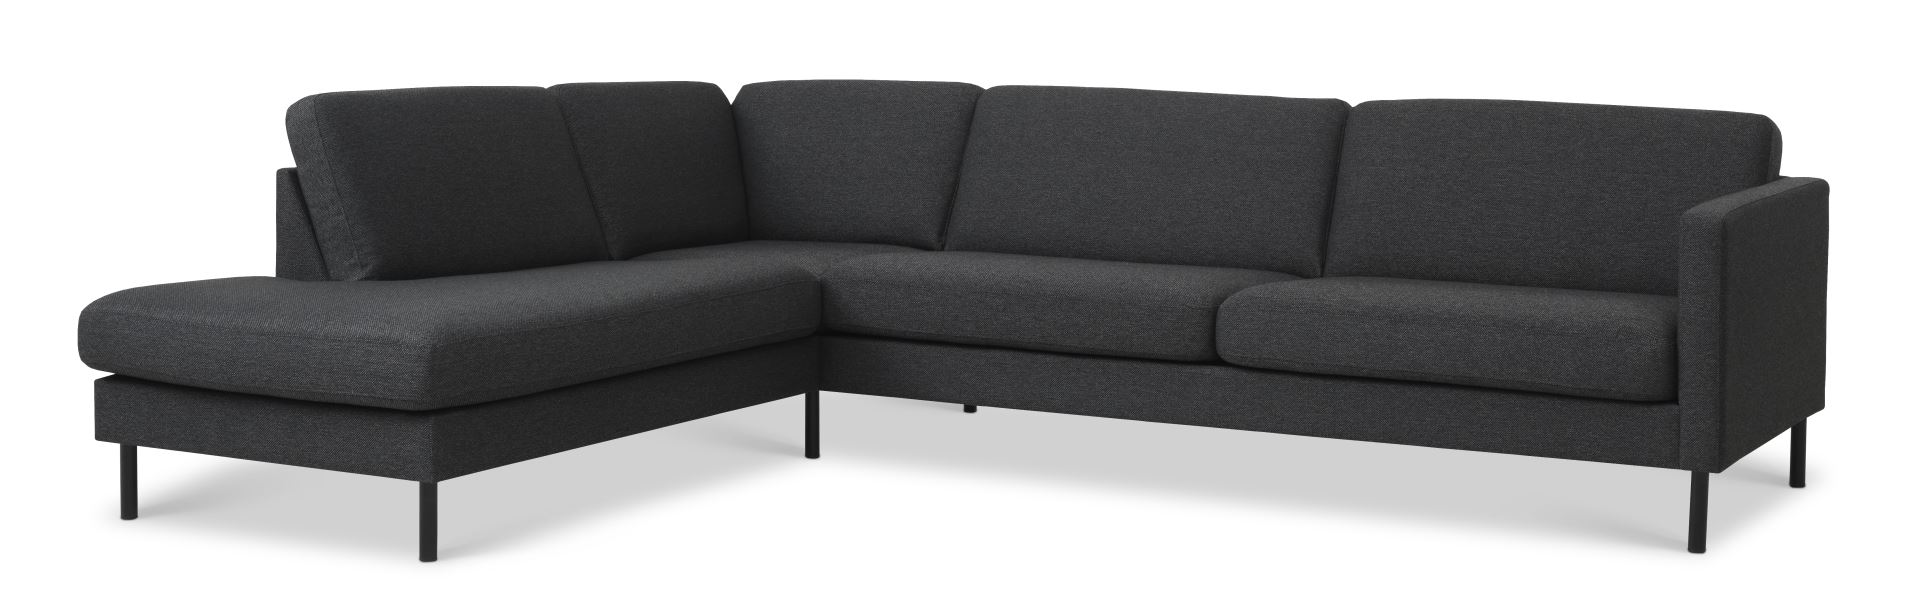 Ask sæt 60 stor OE sofa, m. venstre chaiselong - antrcitgrå polyester stof og sort metal